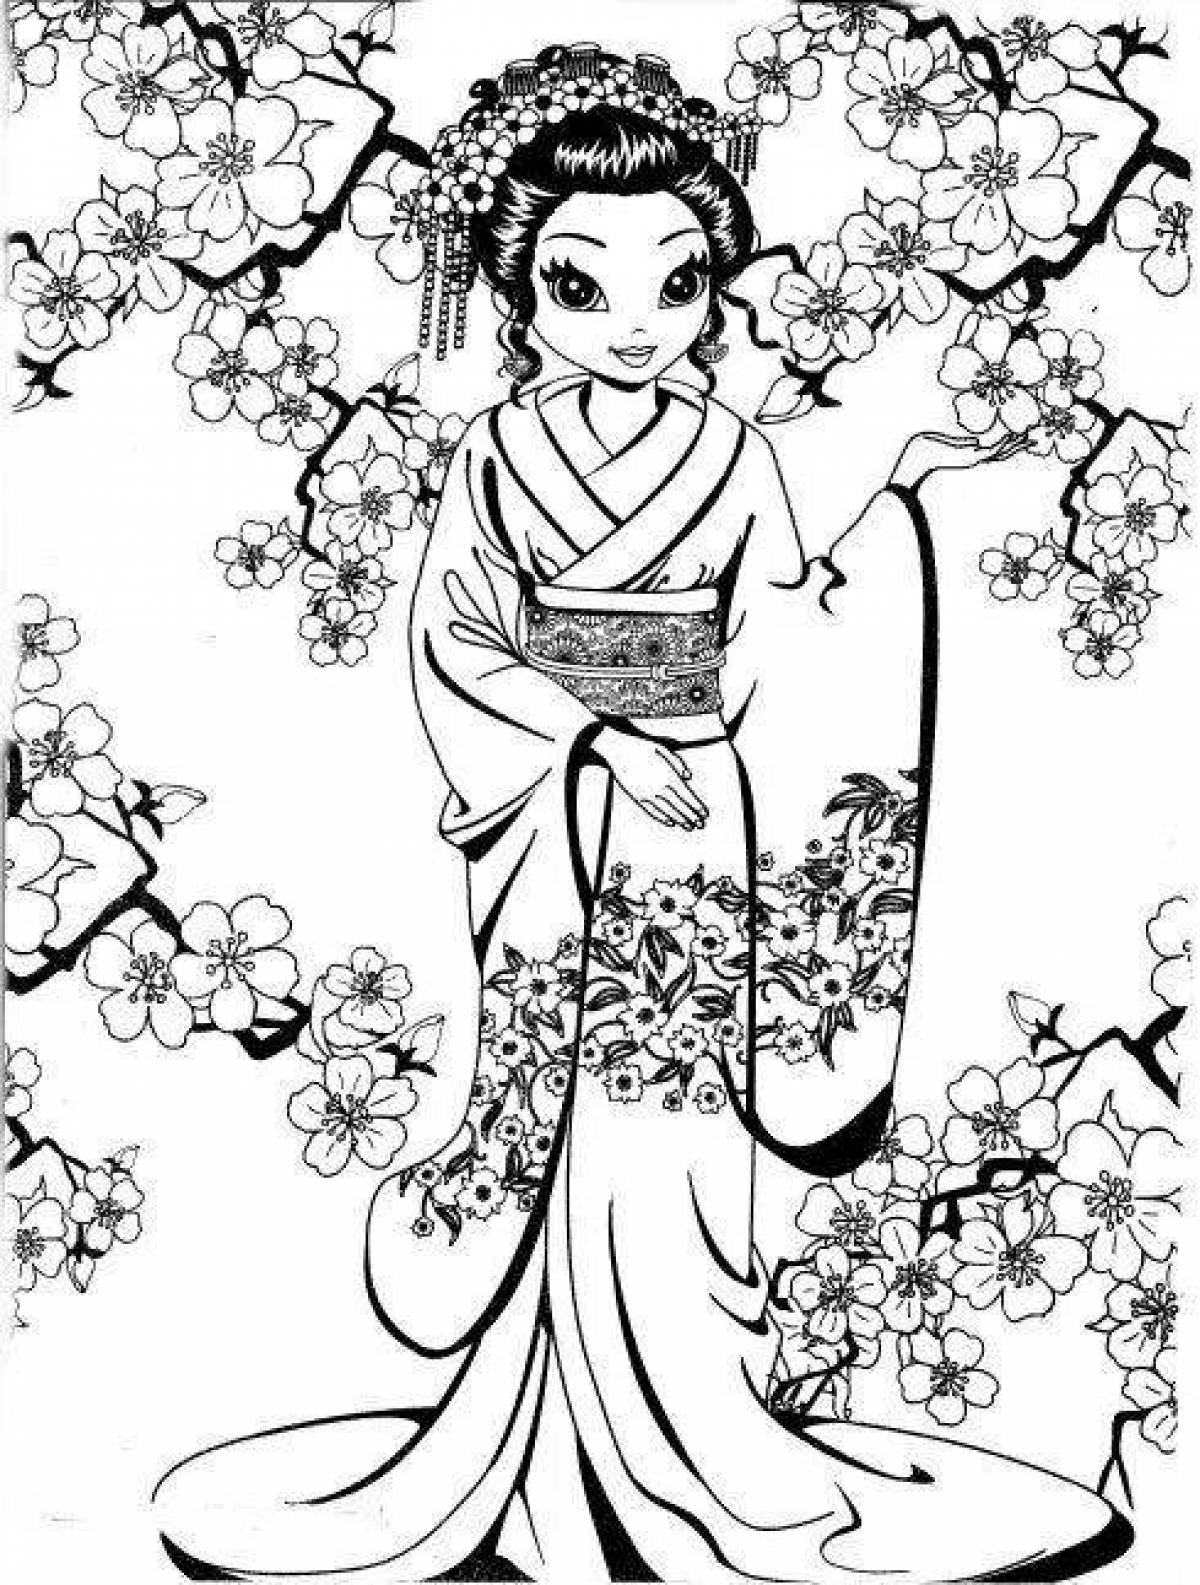 Delightful japanese woman in kimono